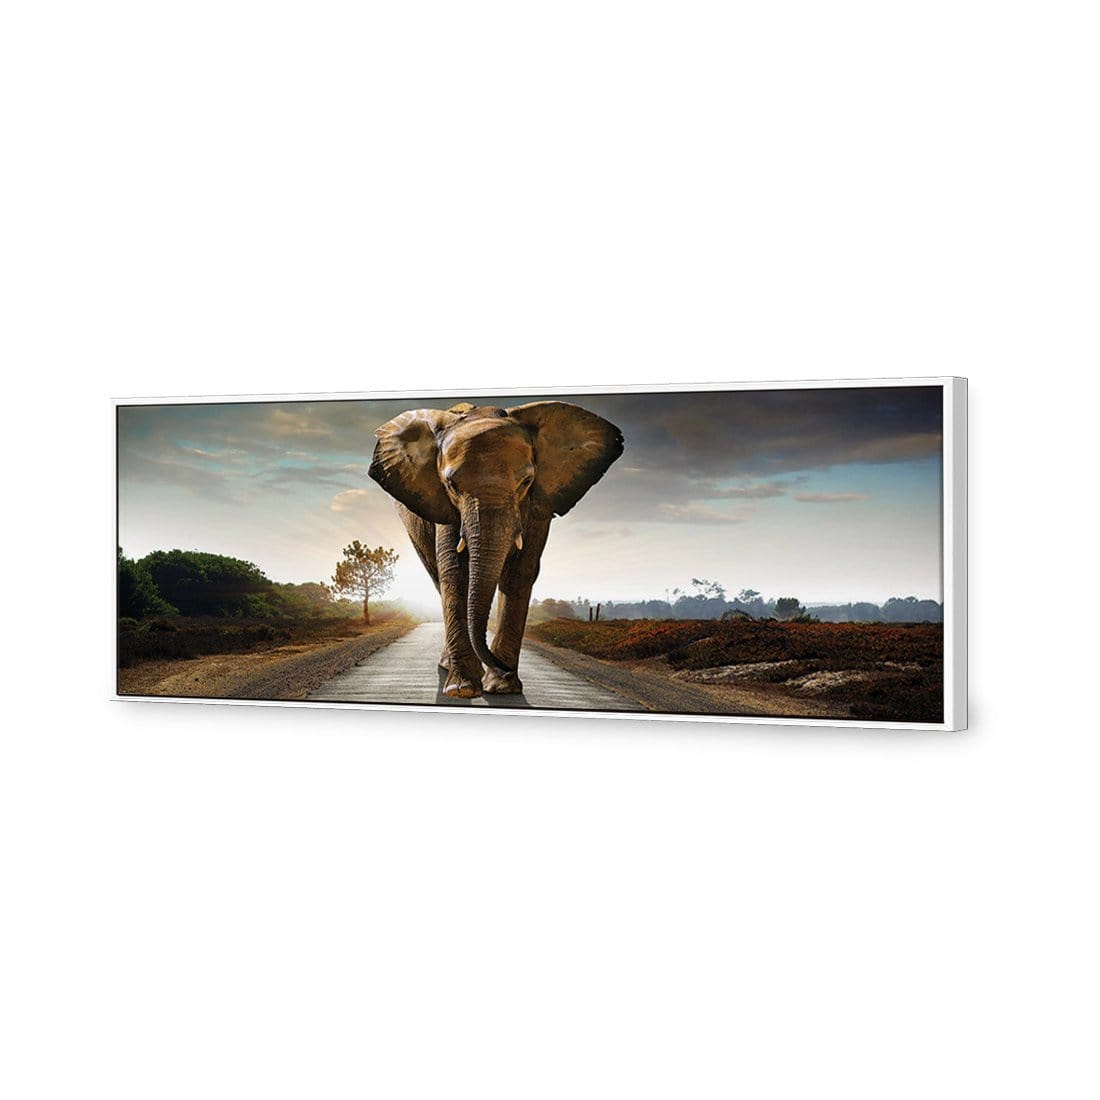 Determined Elephant (Long) Canvas Art-Canvas-Wall Art Designs-60x20cm-Canvas - White Frame-Wall Art Designs